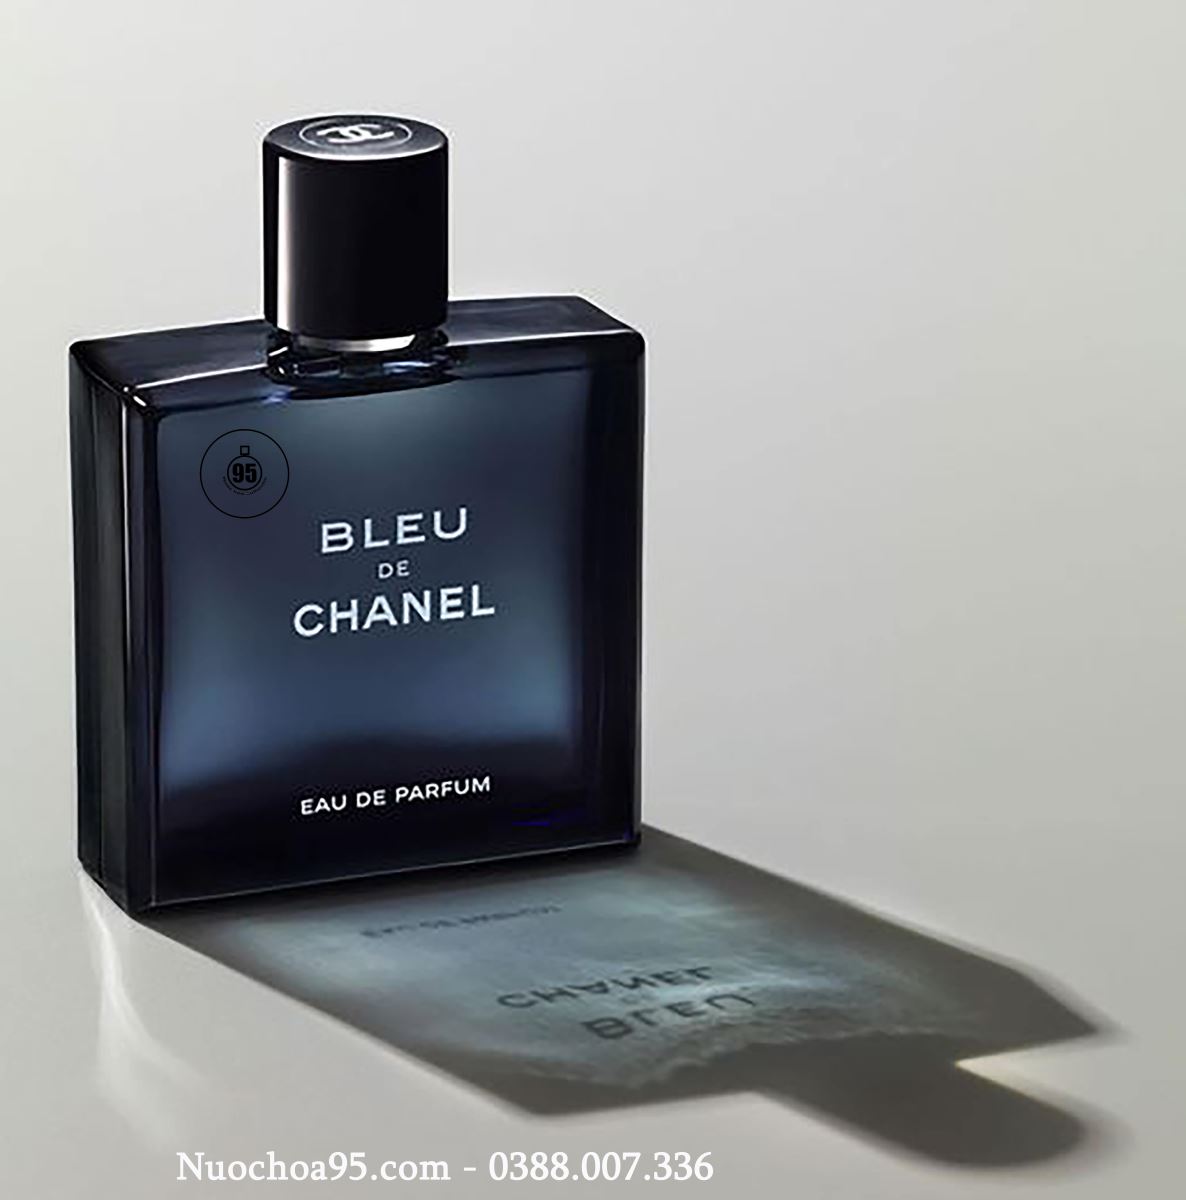 Nước hoa nam Bleu de Chanel Eau de Toilette 100ml 50ml  Myan  Hàng Mỹ  nội địa